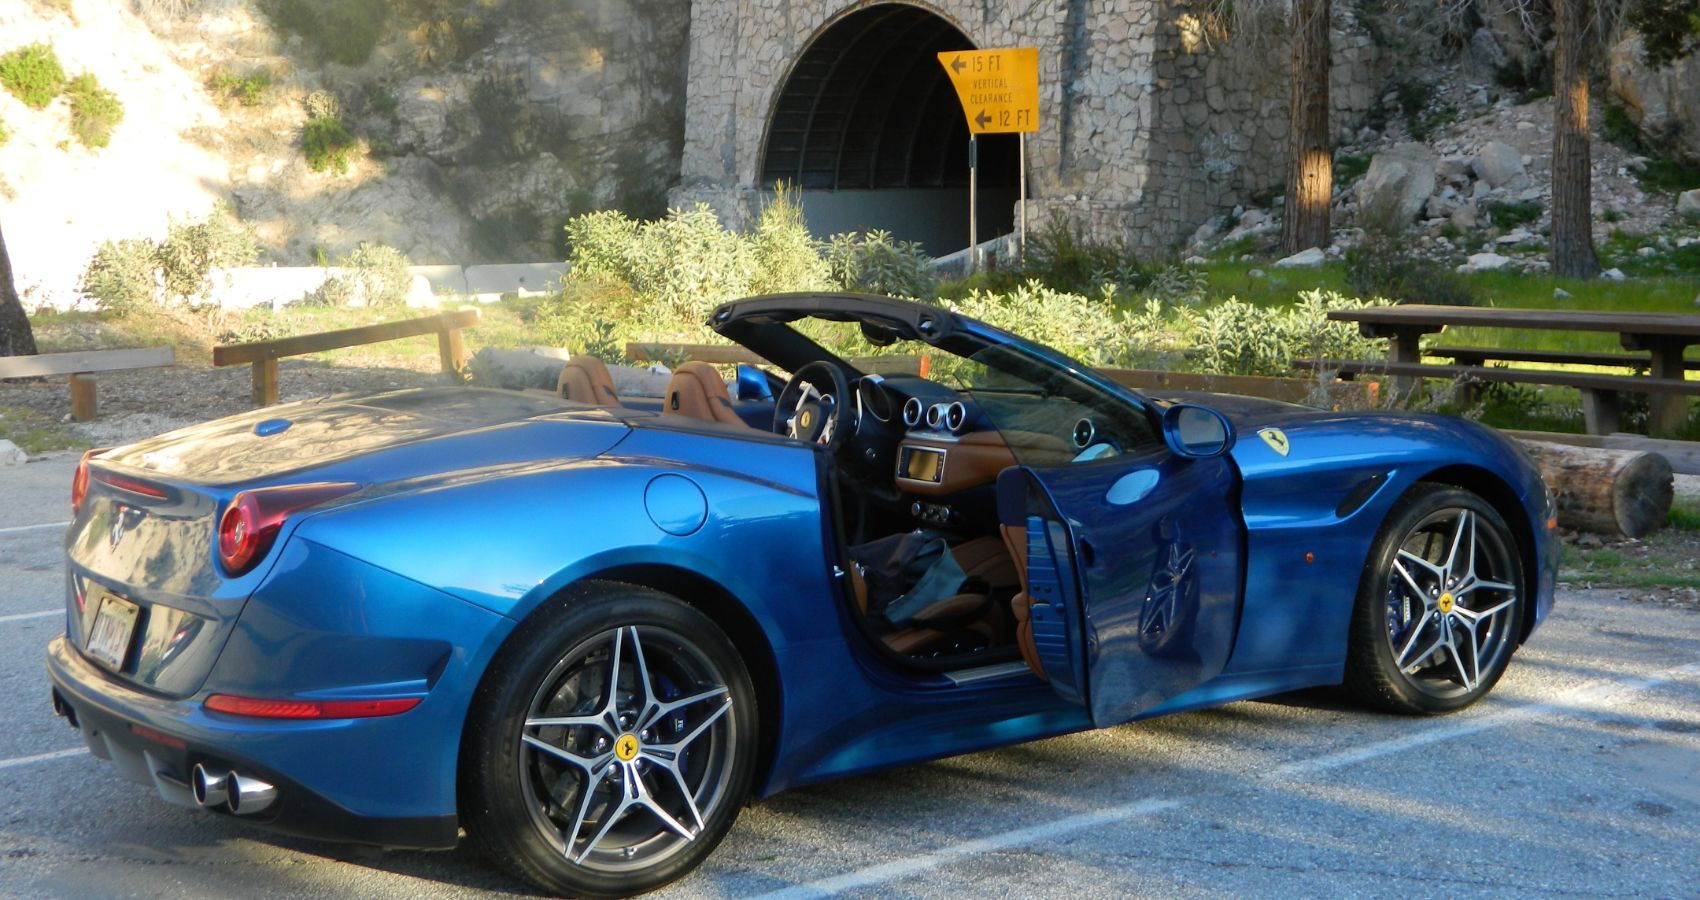 Ferrari California Turbo road trip 